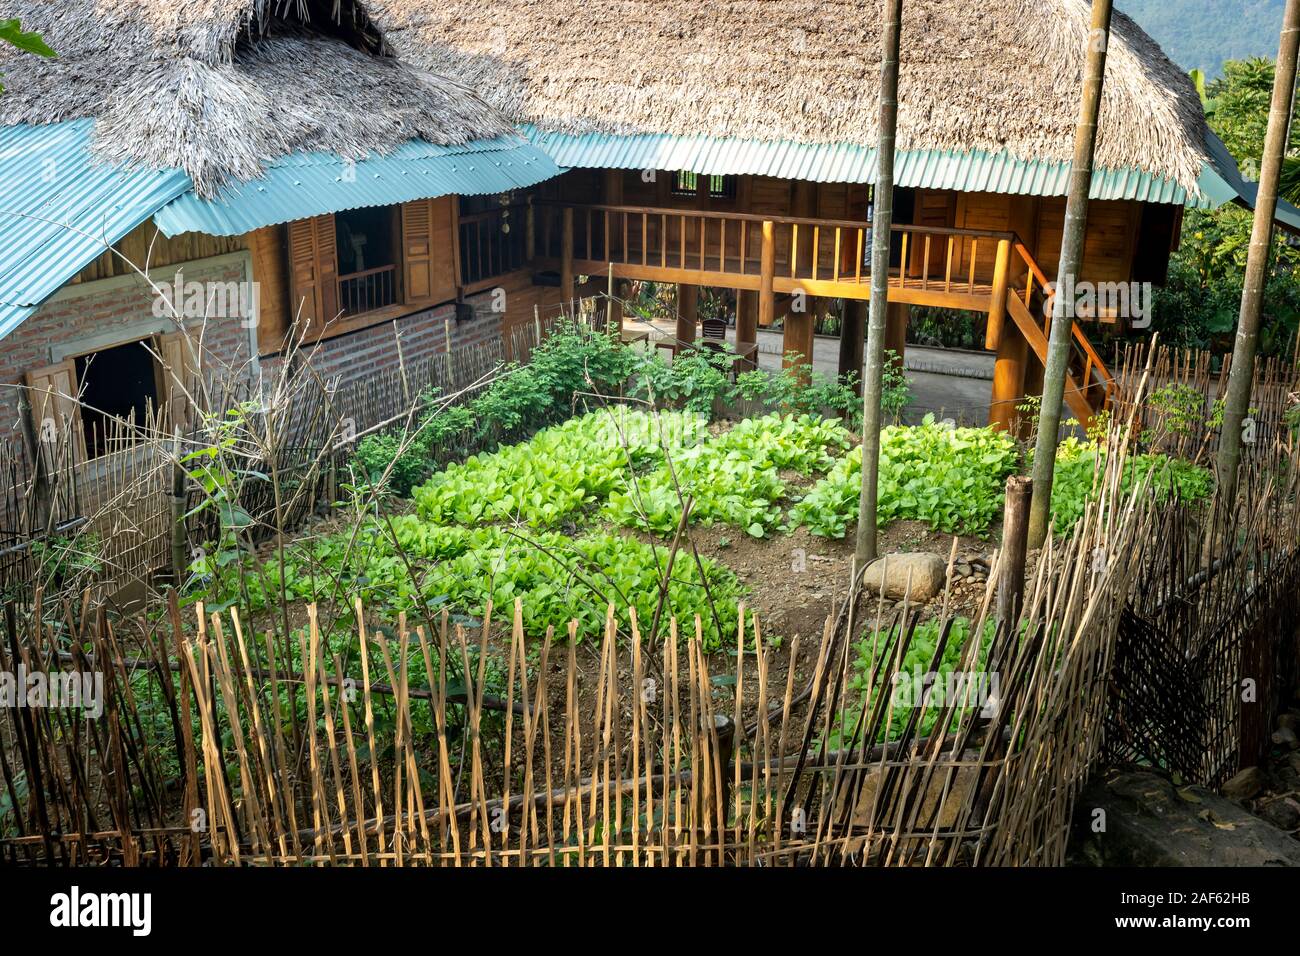 Pu Luong Commune, Thanh Hoa Province, Vietnam - September 30, 2019: Stilt houses of ethnic minorities doing homestay accommodation in Pu Luong Commune Stock Photo